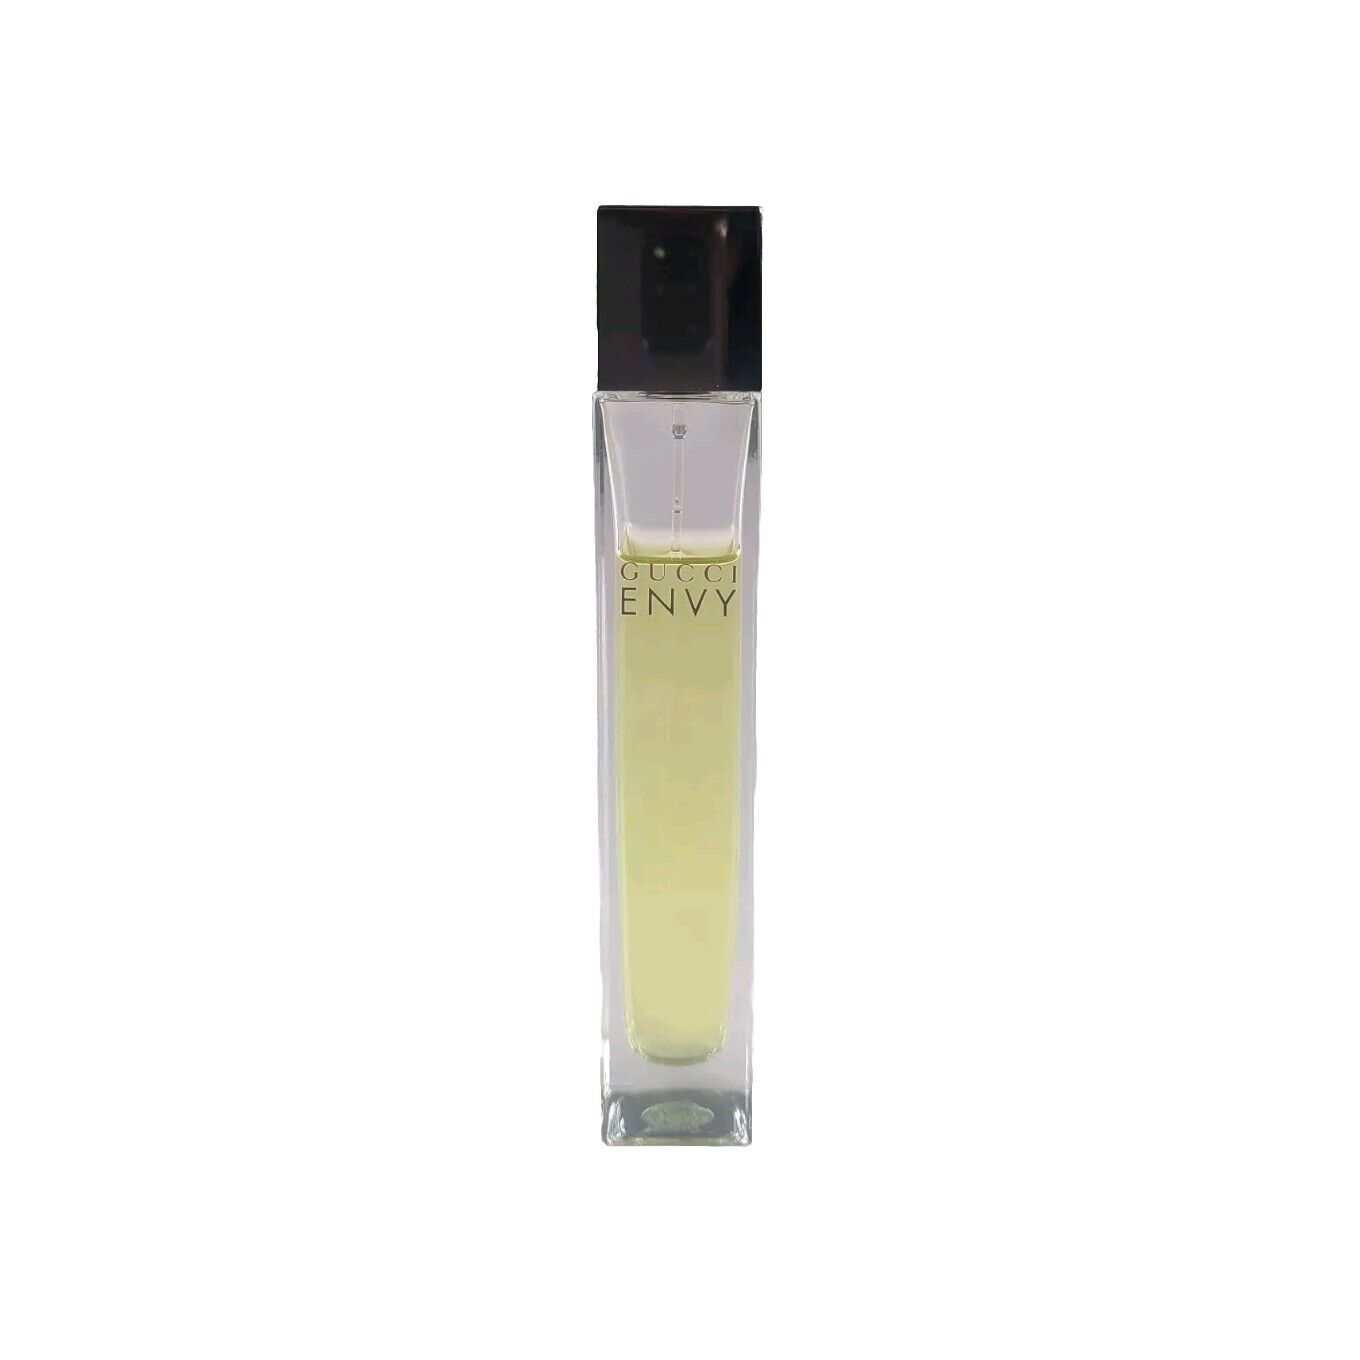 Gucci Envy Eau de Toilette 50ml 1.7 Fl. Oz. Spray Perfume - Vintage No Box